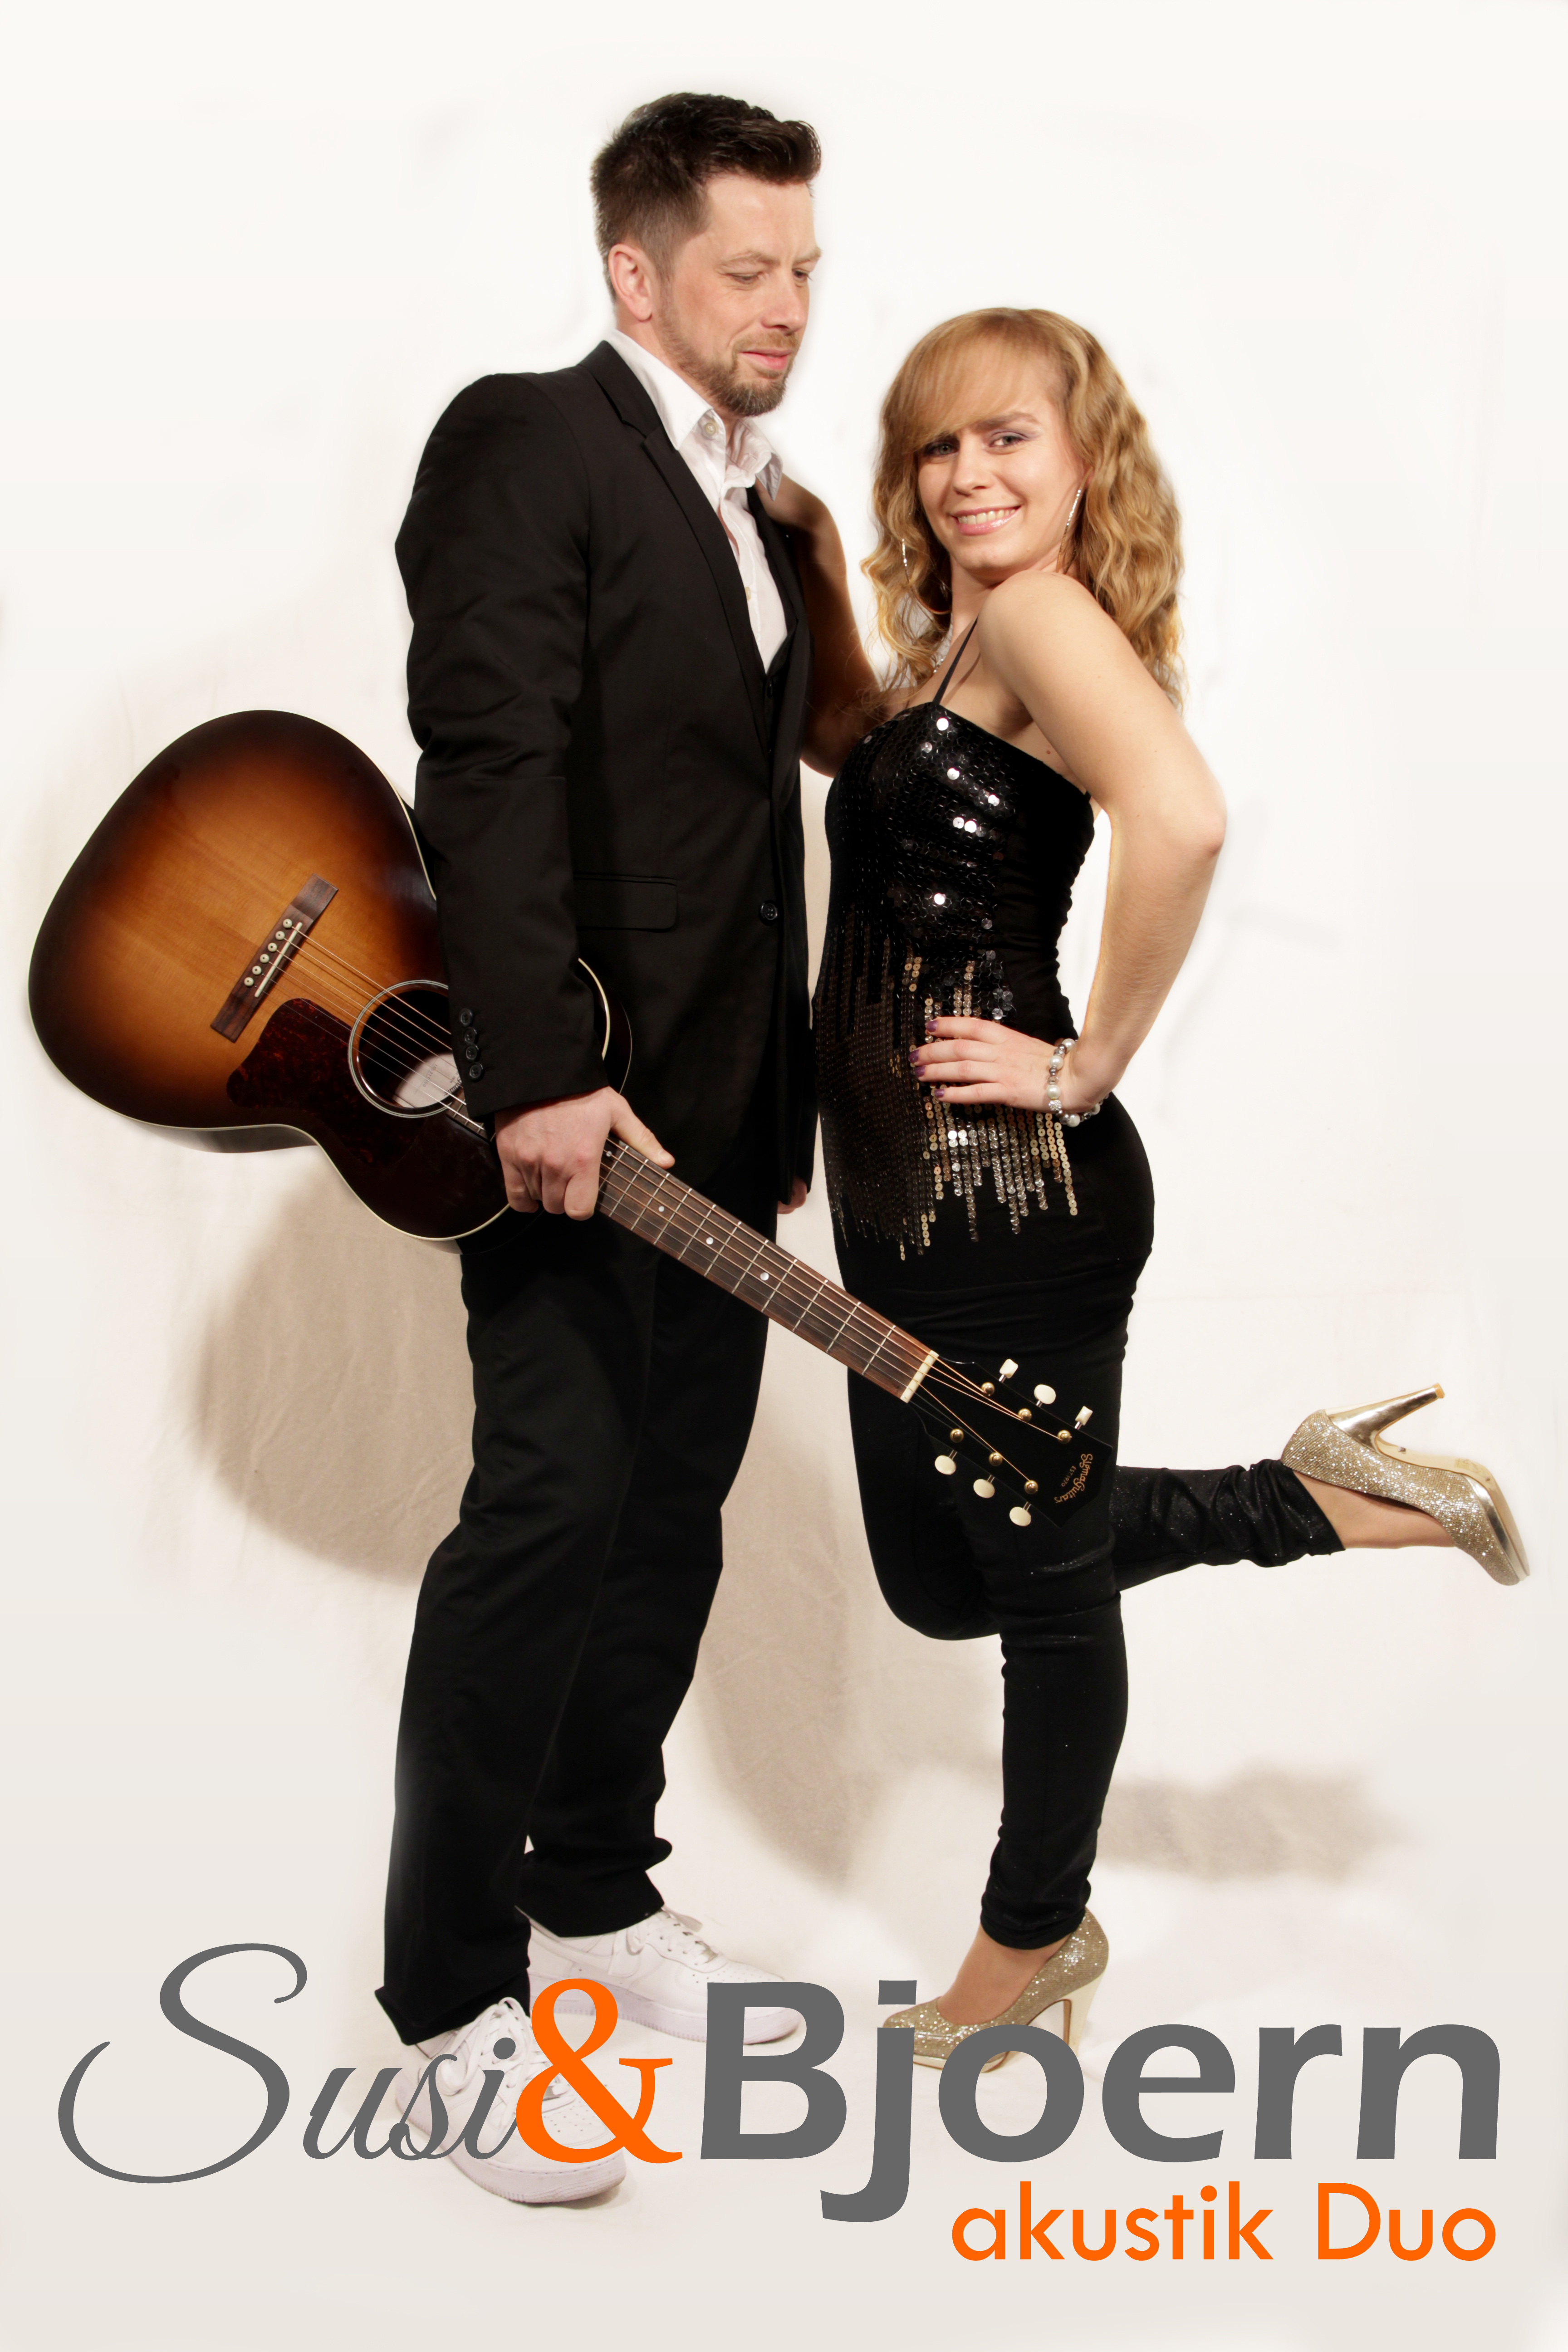 Susi & Bjoern acoustic Duo